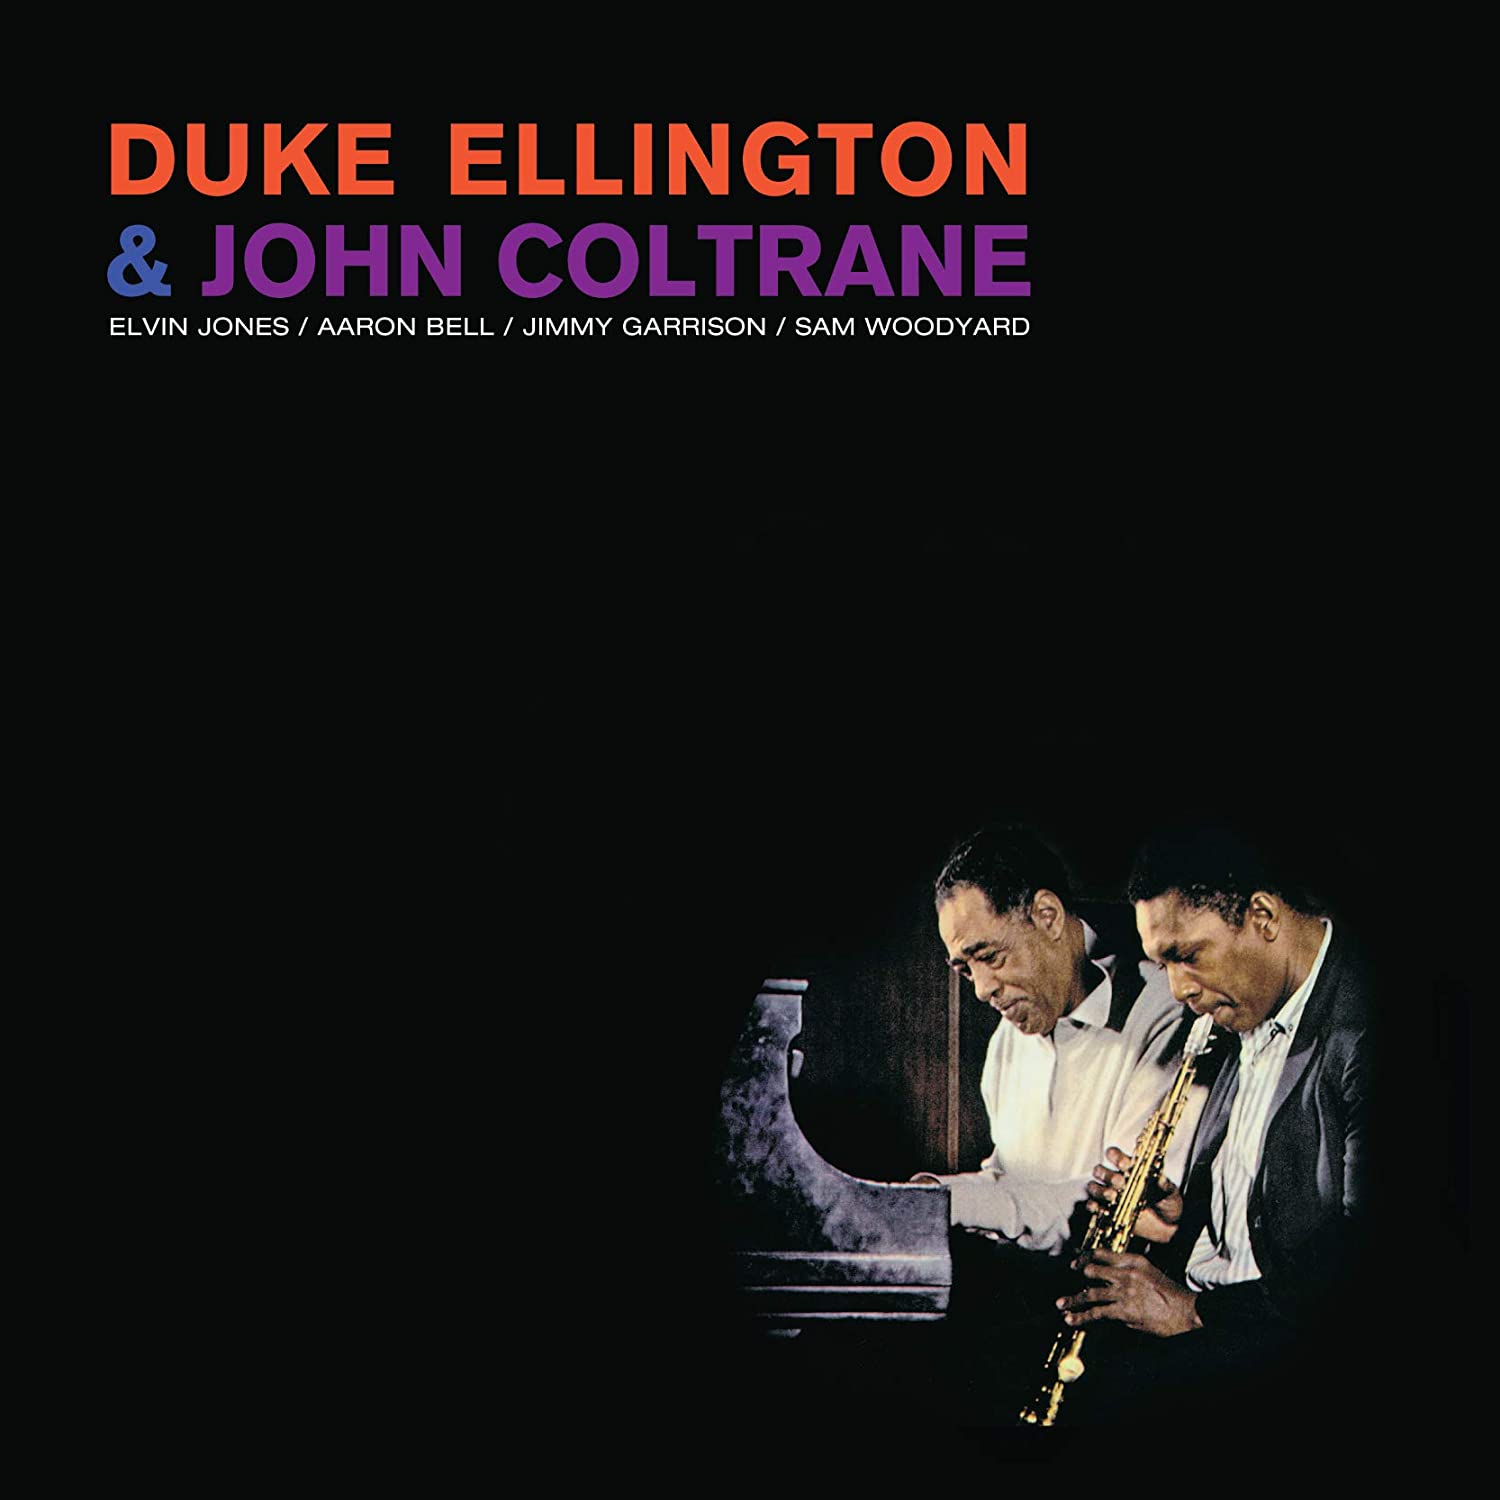 Duke Ellington & John Coltrane (Verve Acoustic Sounds Series) pre-order die 25 Feb 22